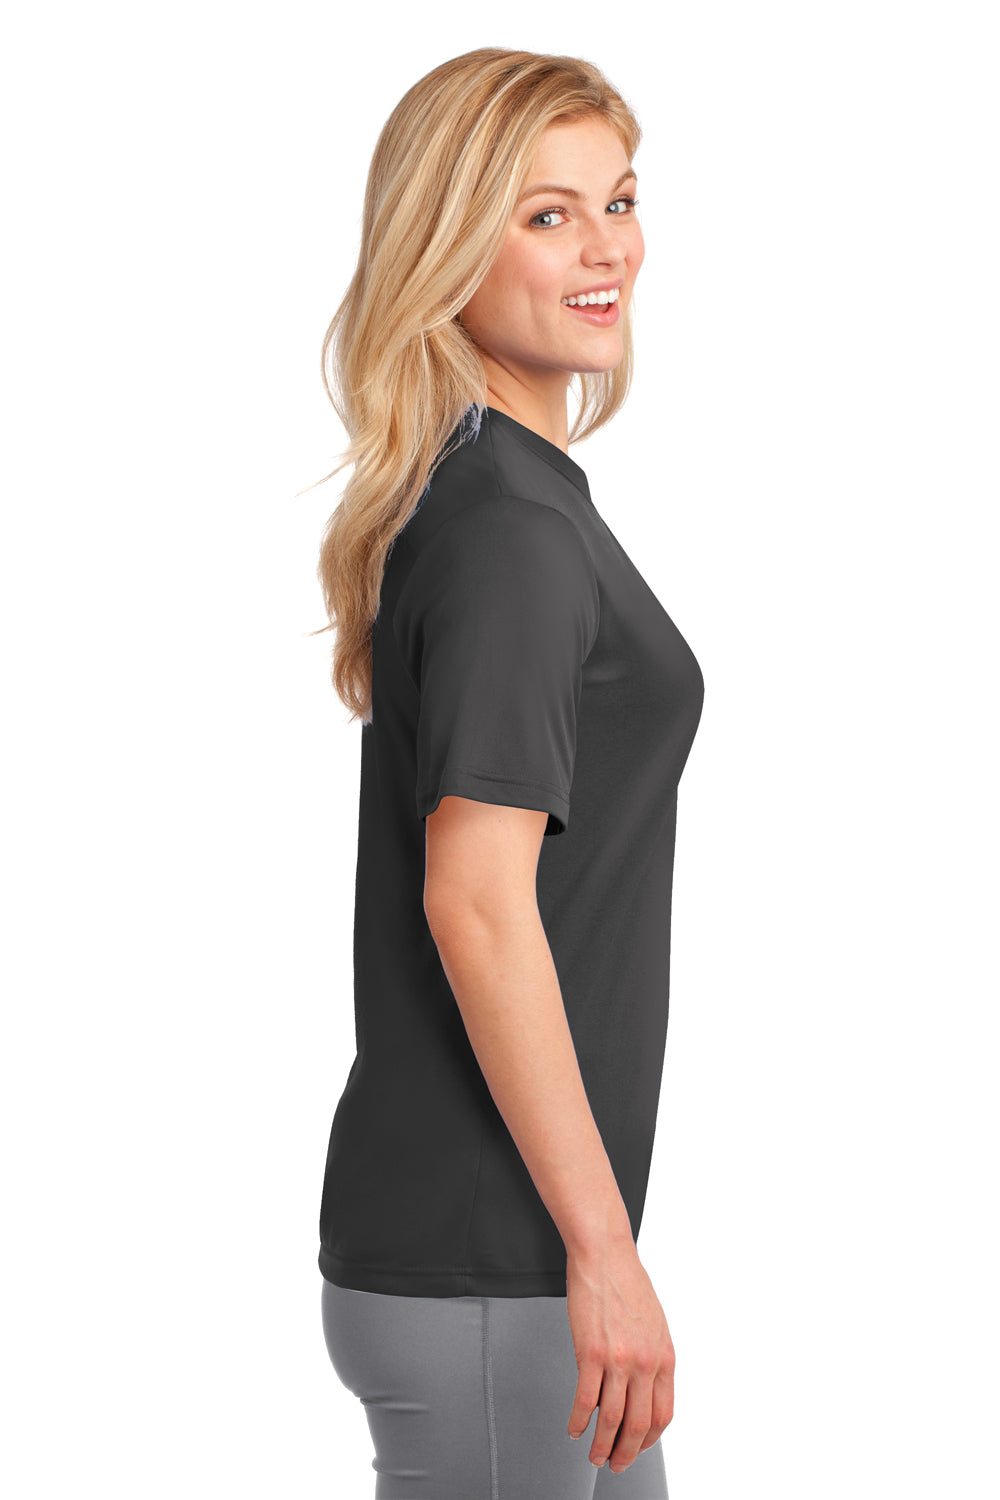 Port & Company LPC380 Womens Dry Zone Performance Moisture Wicking Short Sleeve Crewneck T-Shirt Charcoal Grey Side